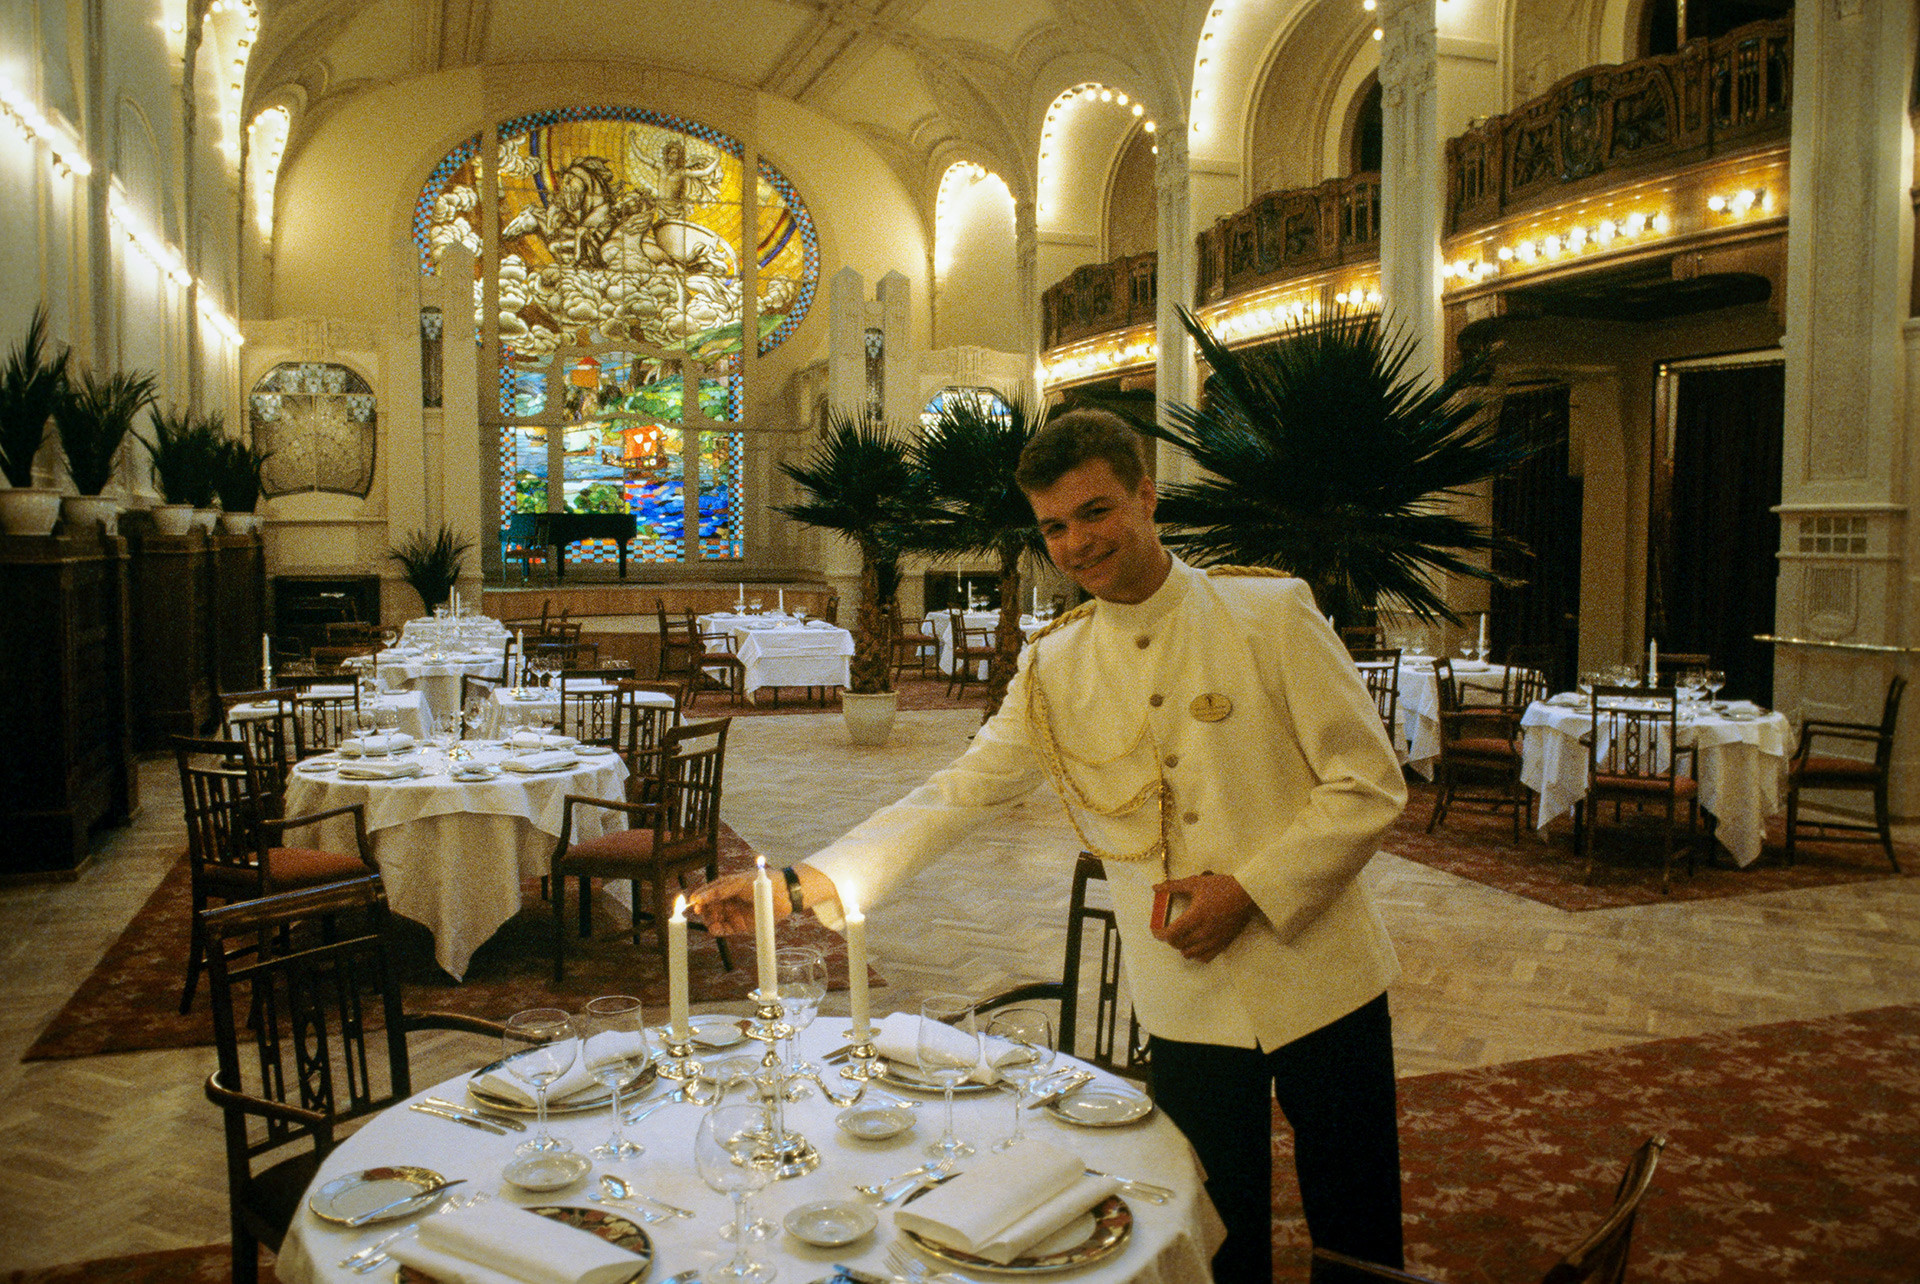 Krysha, bar yang paling eksotis dari empat restoran di Grand Hotel Eropa di bagian paling atas hotel. Para pelayan mengenakan pakaian zaman Peter I.